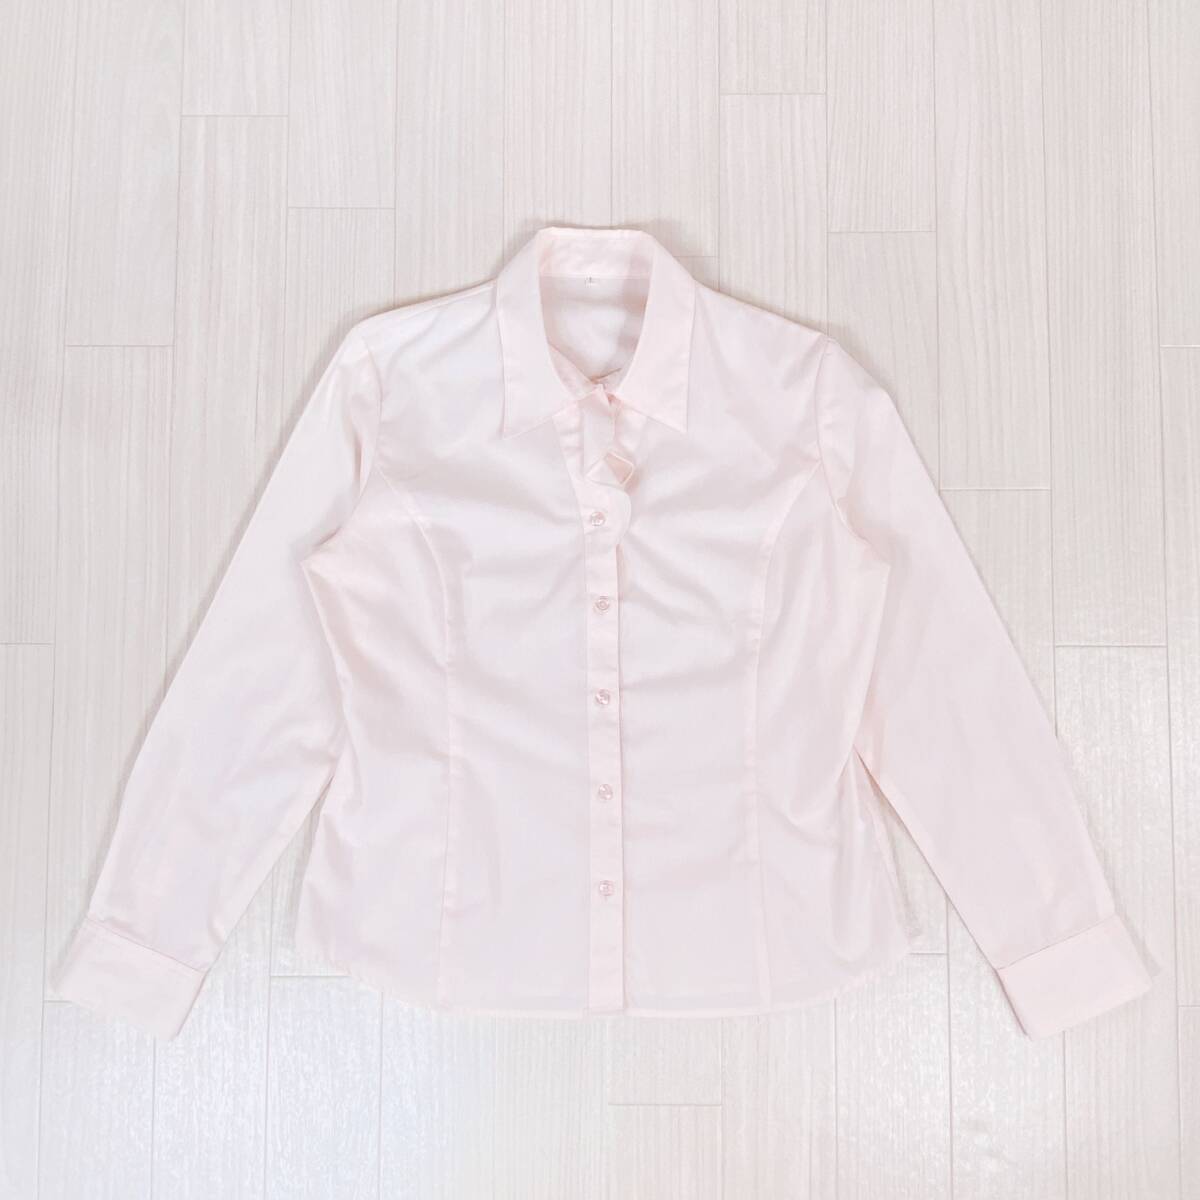 Z1186 美品 レディース 長袖 ワイシャツ ブラウス ライトピンク Lサイズ 万能 オフィススタイル スーツインナー かわいい シンプル USED_画像6